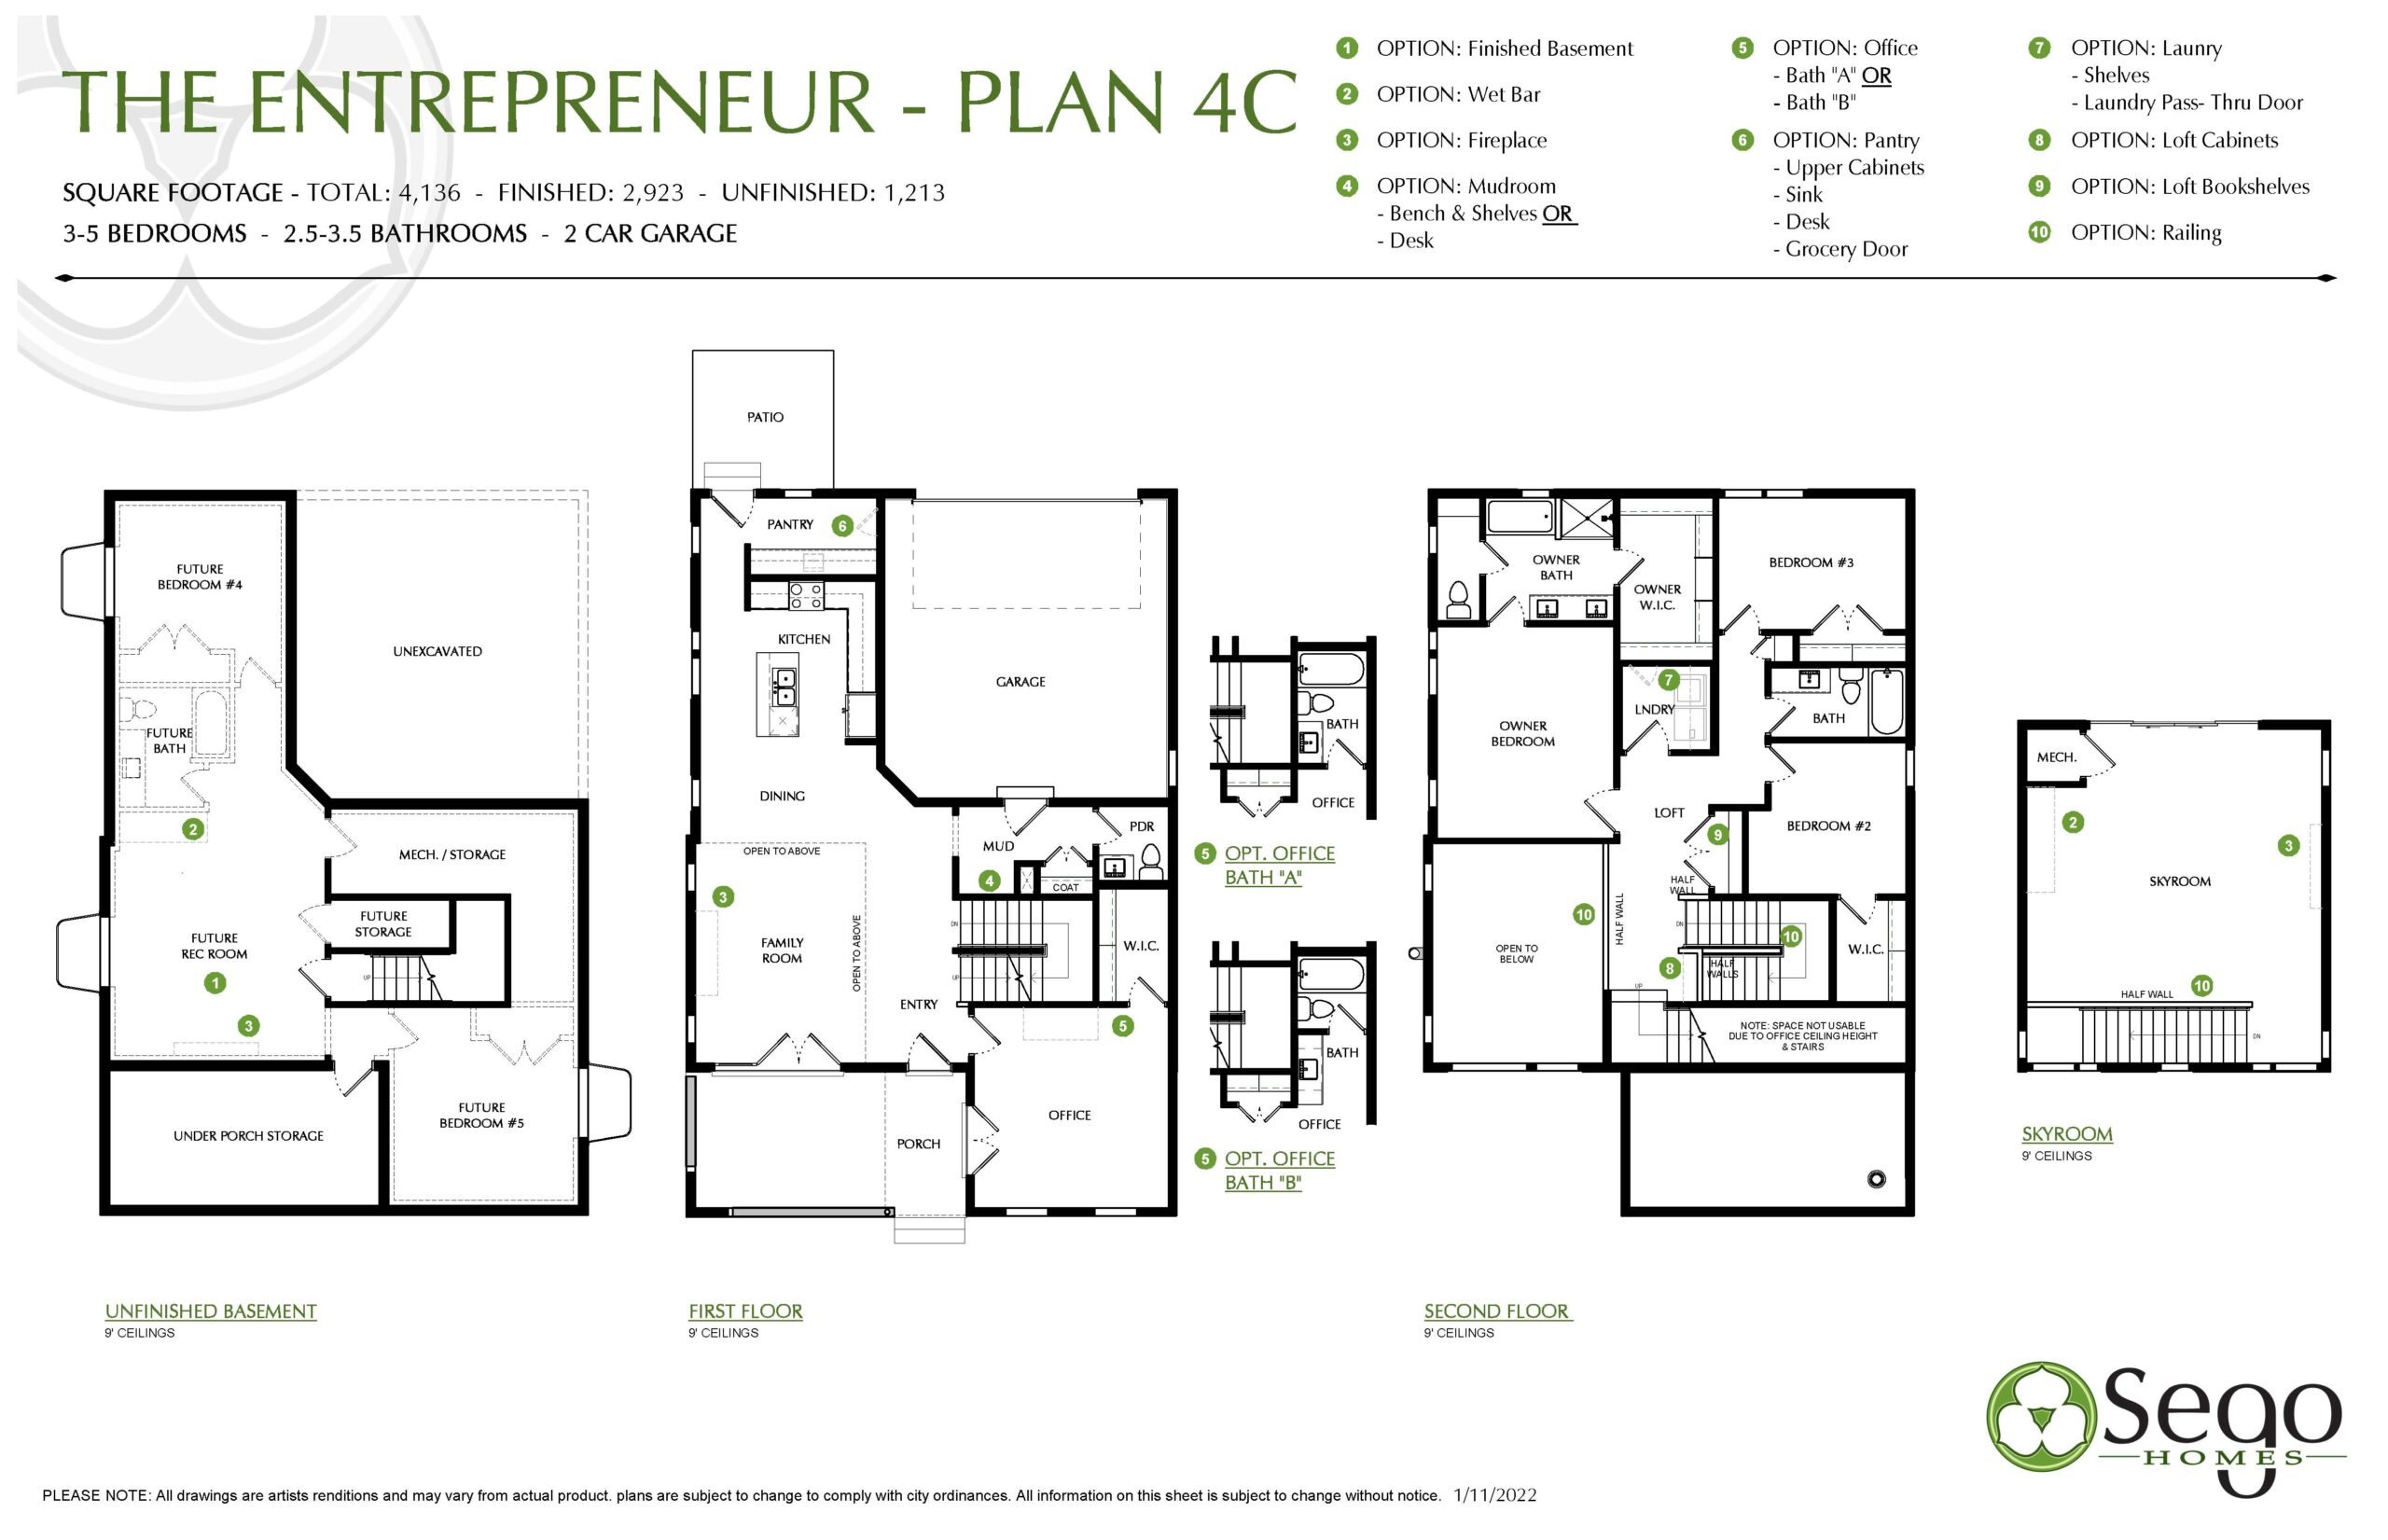 The Entrepreneur 4C Floorplan in Cascade Village